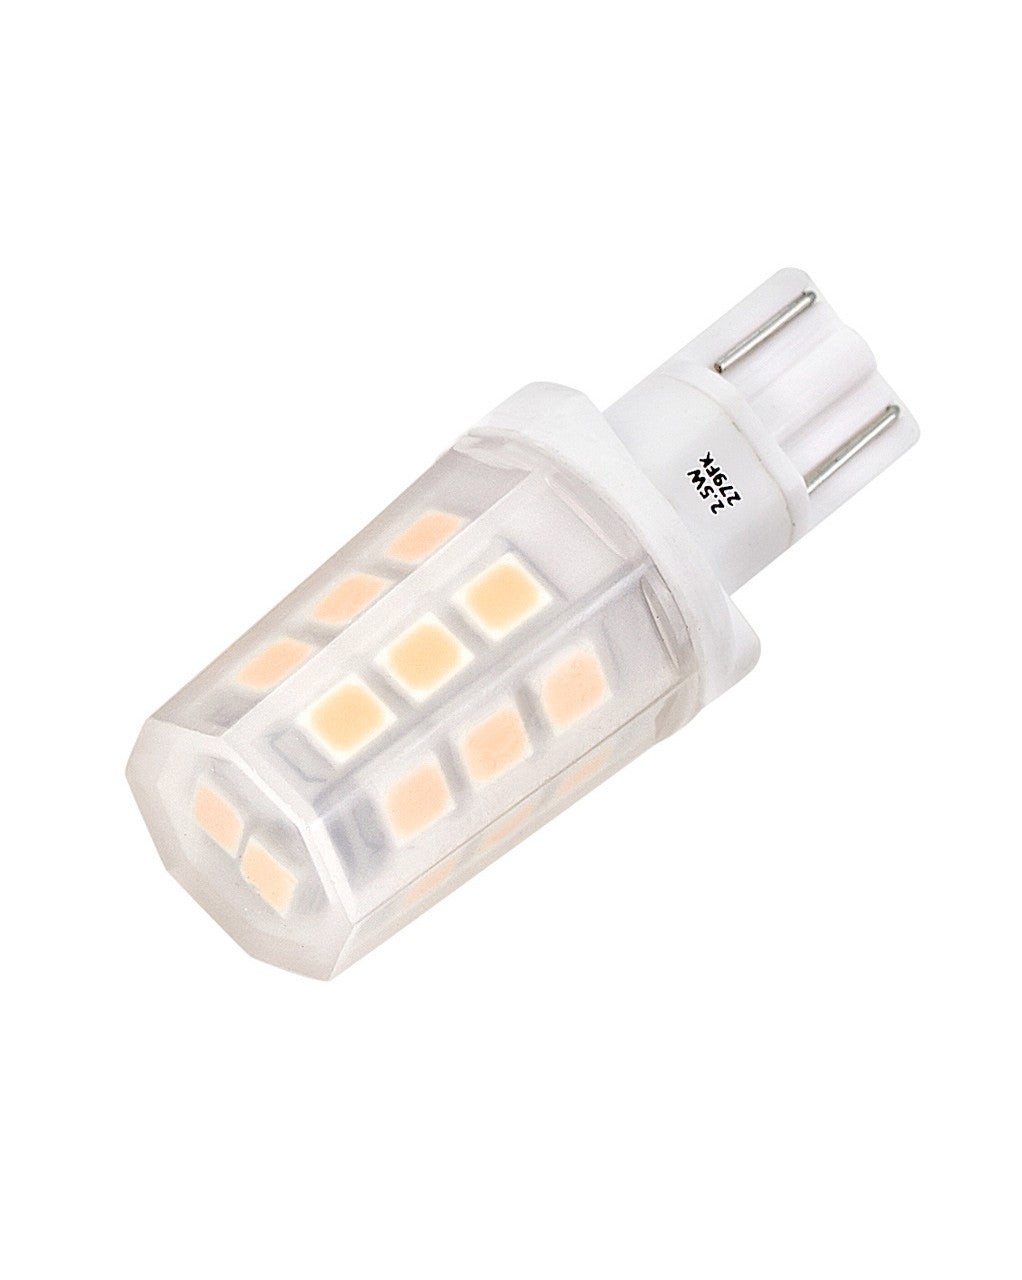 Hinkley - 00T5-27LED-1.5 - LED Lamp - Led Bulb